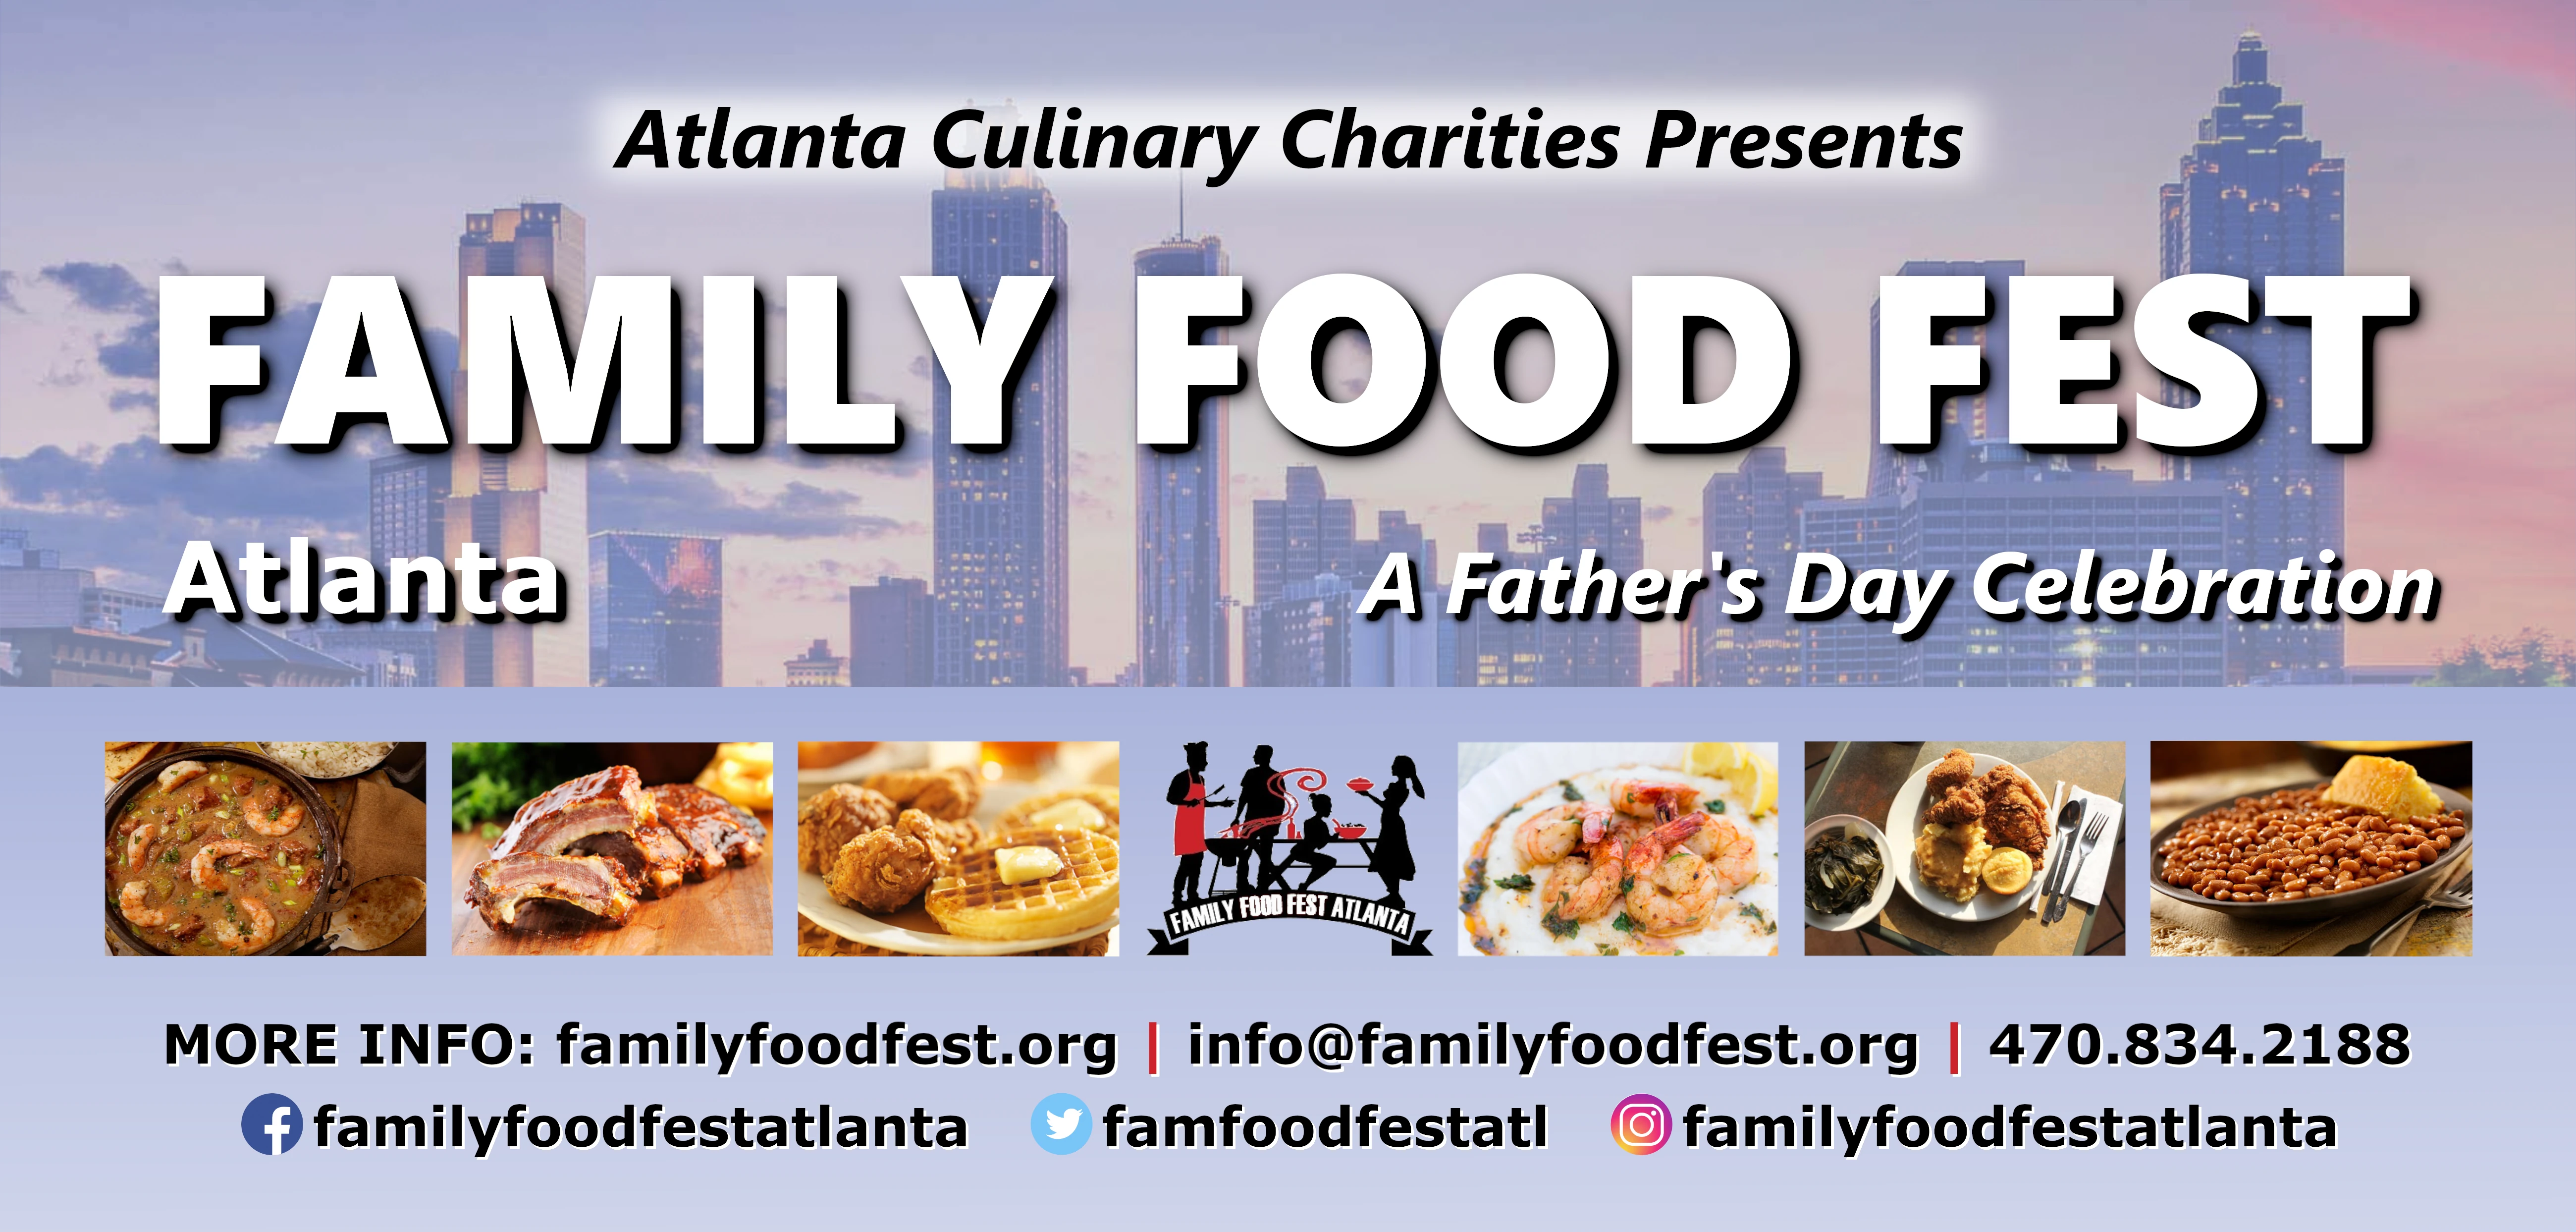 Family Food Fest Atlanta Header Image